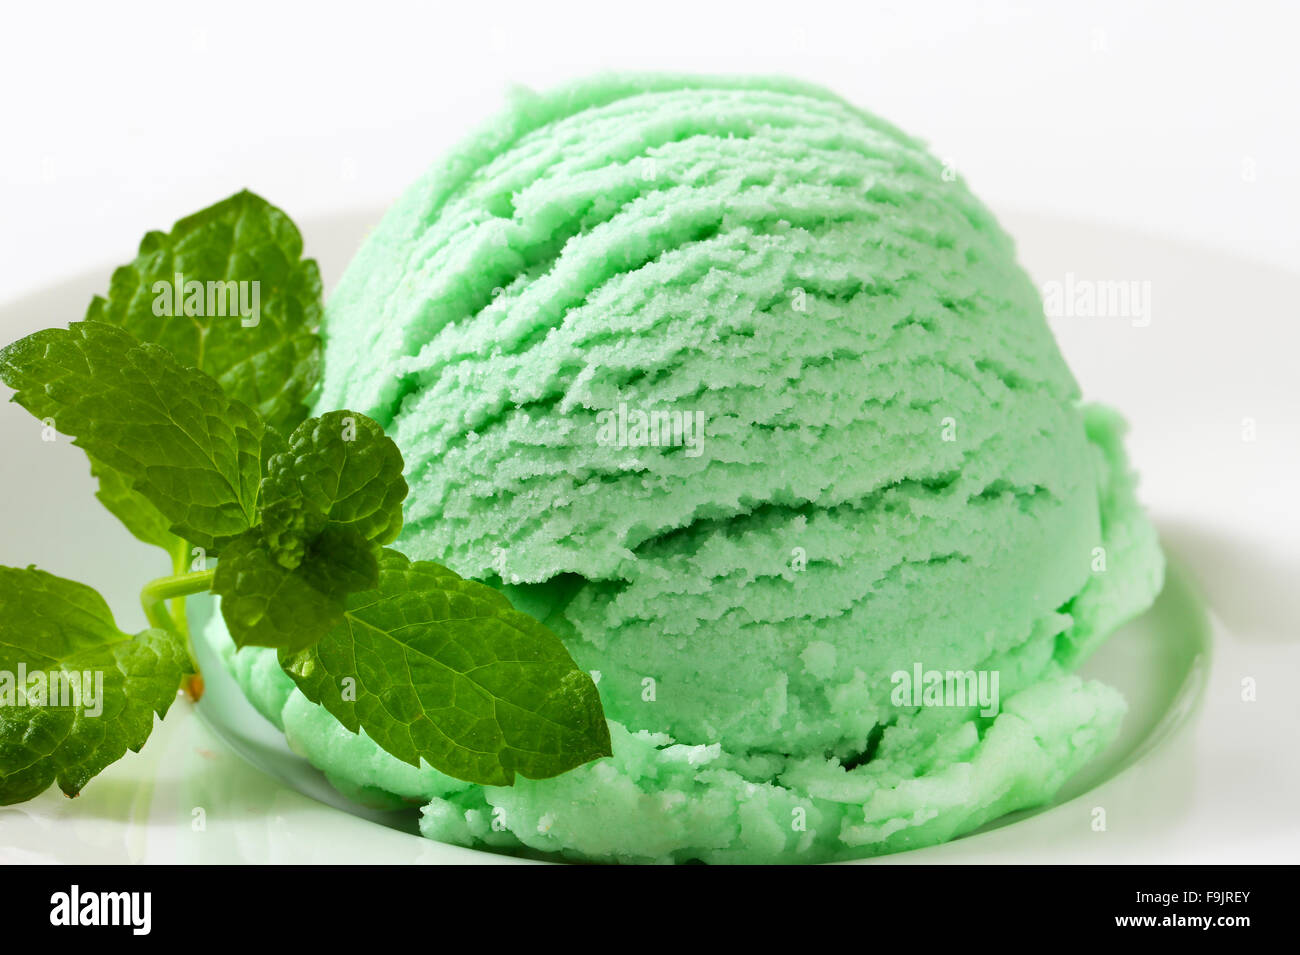 Scoop of green ice cream on plate Stock Photo